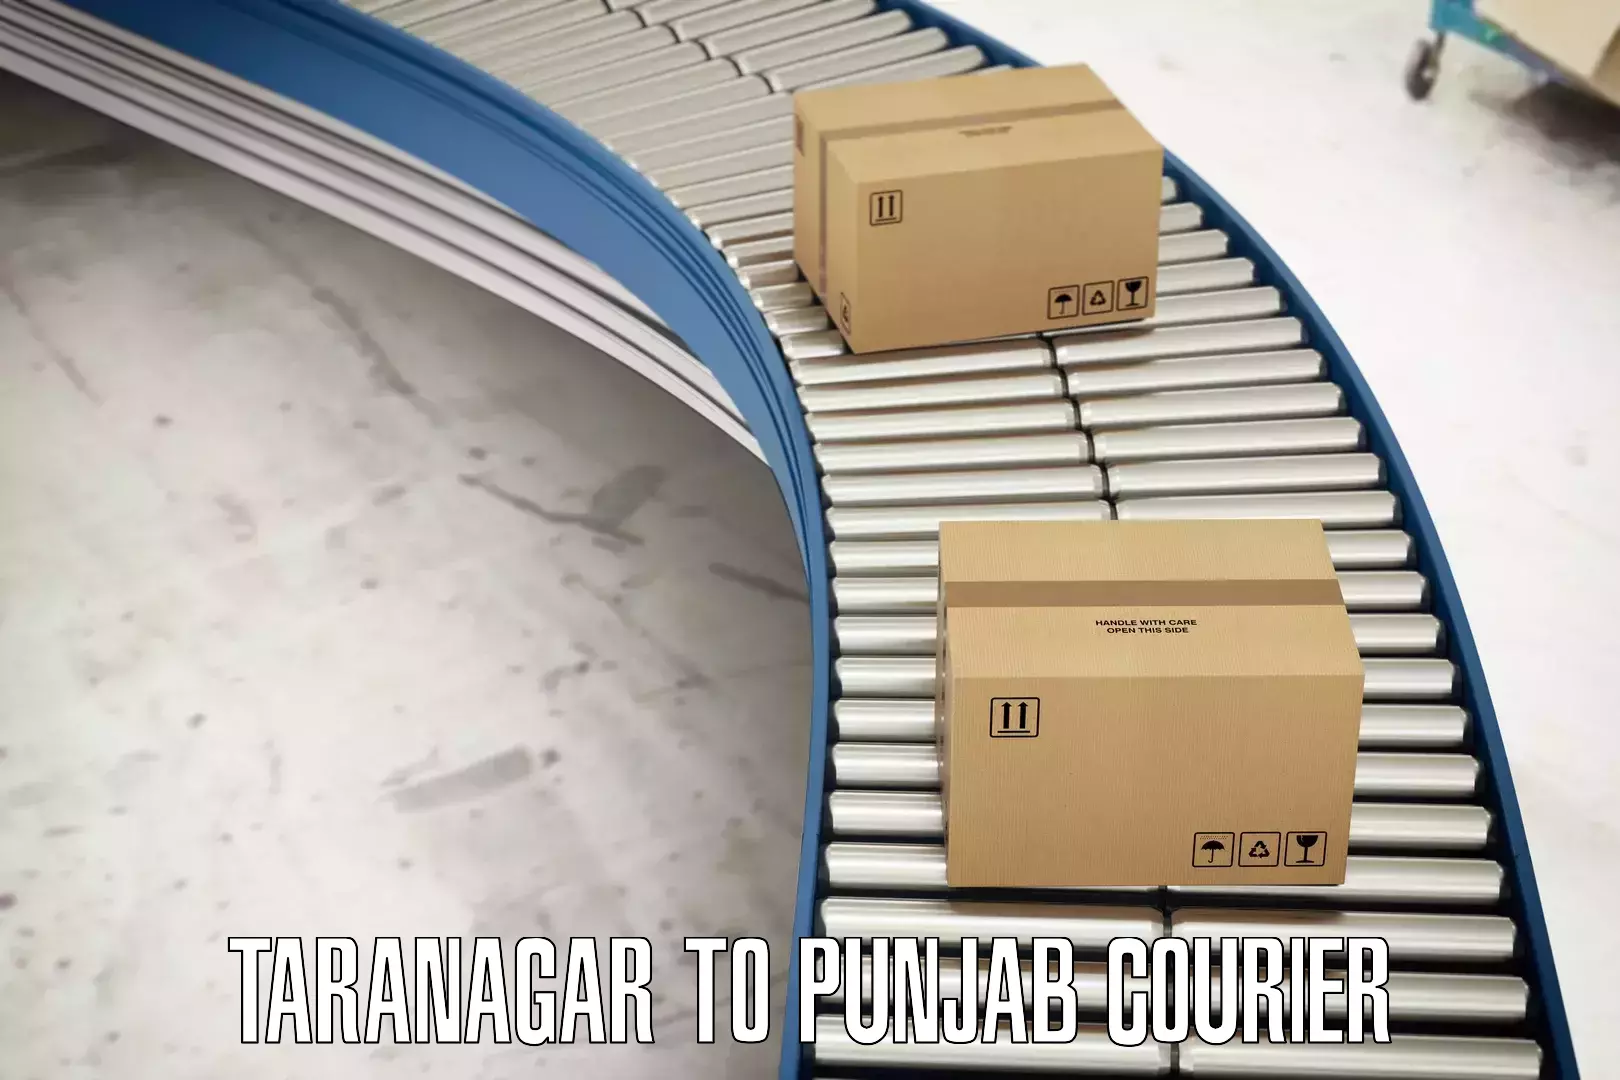 Flexible delivery scheduling Taranagar to Amritsar